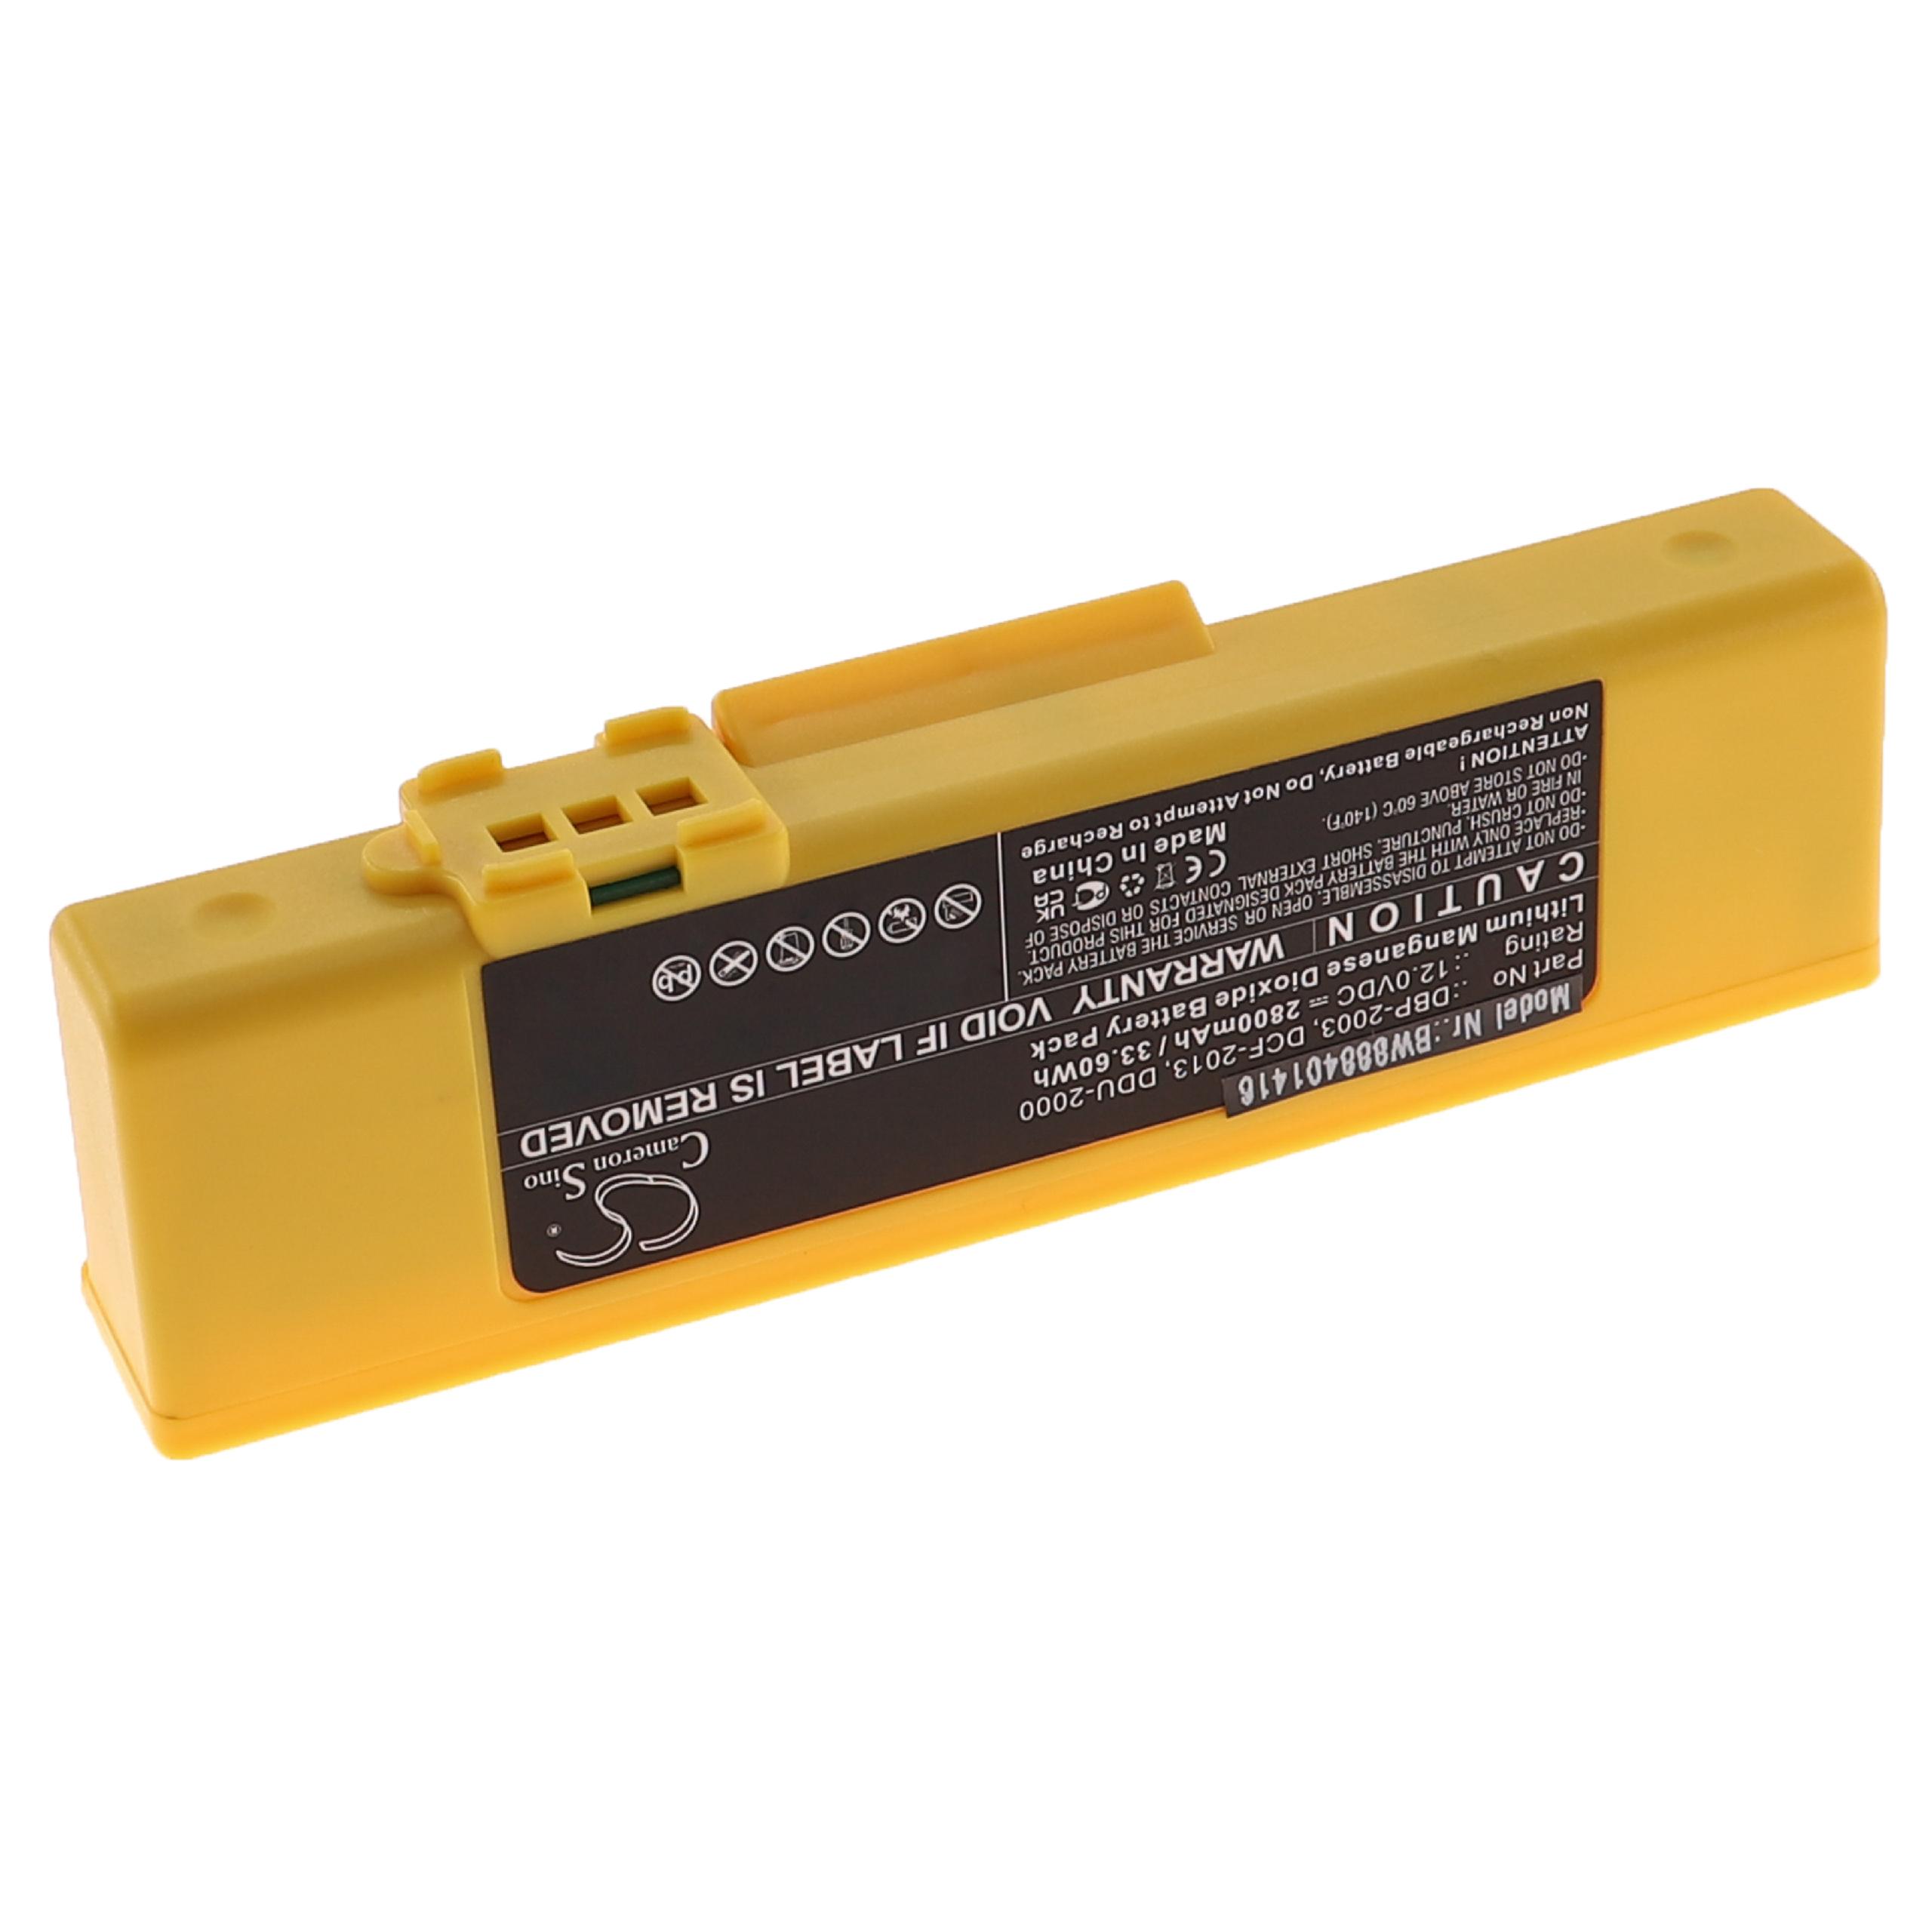 Bateria zamiennik Defibtech DDU-2000, DCF-2013, DBP-2003 - 2800 mAh 12 V Li-MnO2